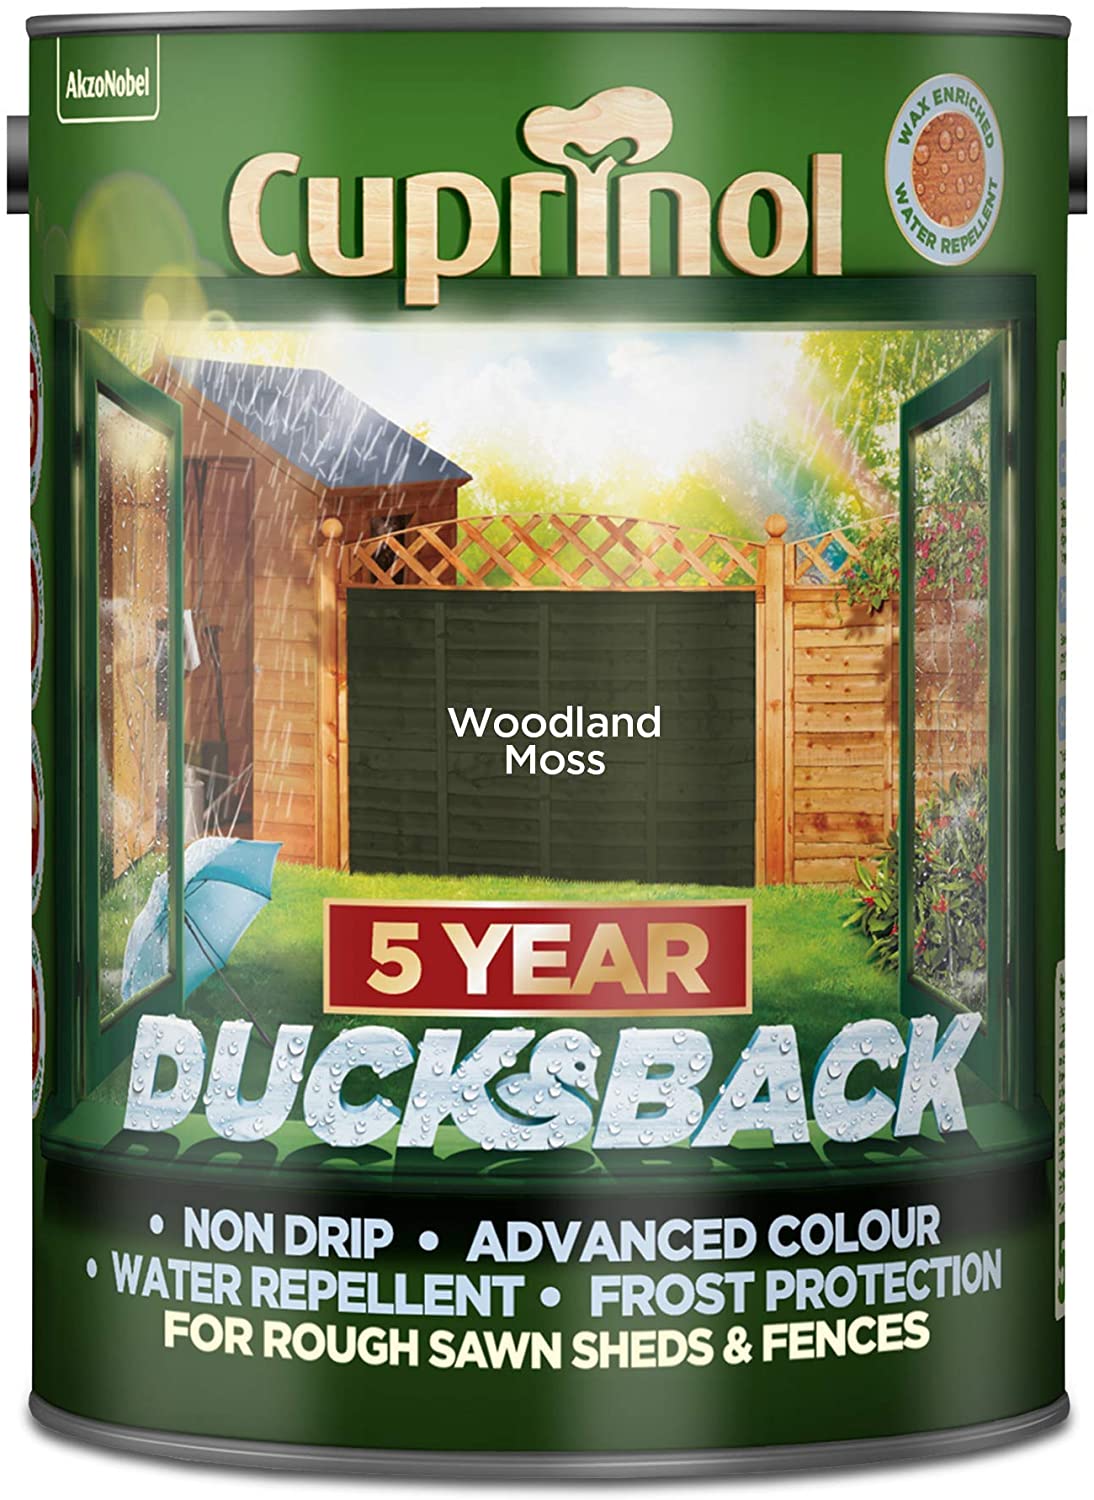 Cuprinol Ducksback 5 Year Waterproof For Sheds And Fences - Woodland Moss Litre Garden & Diy Home